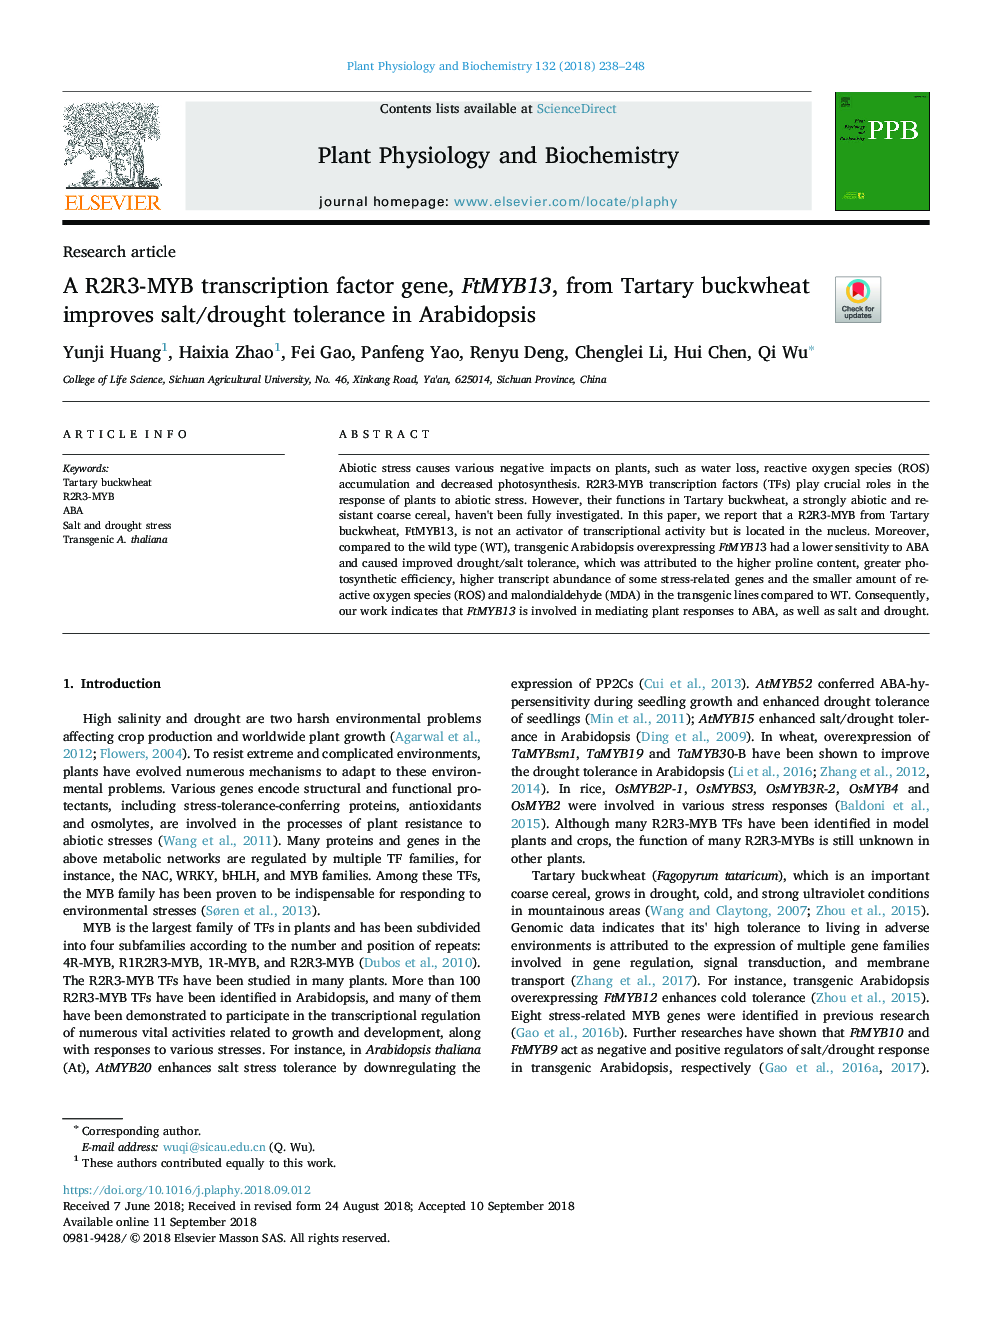 A R2R3-MYB transcription factor gene, FtMYB13, from Tartary buckwheat improves salt/drought tolerance in Arabidopsis